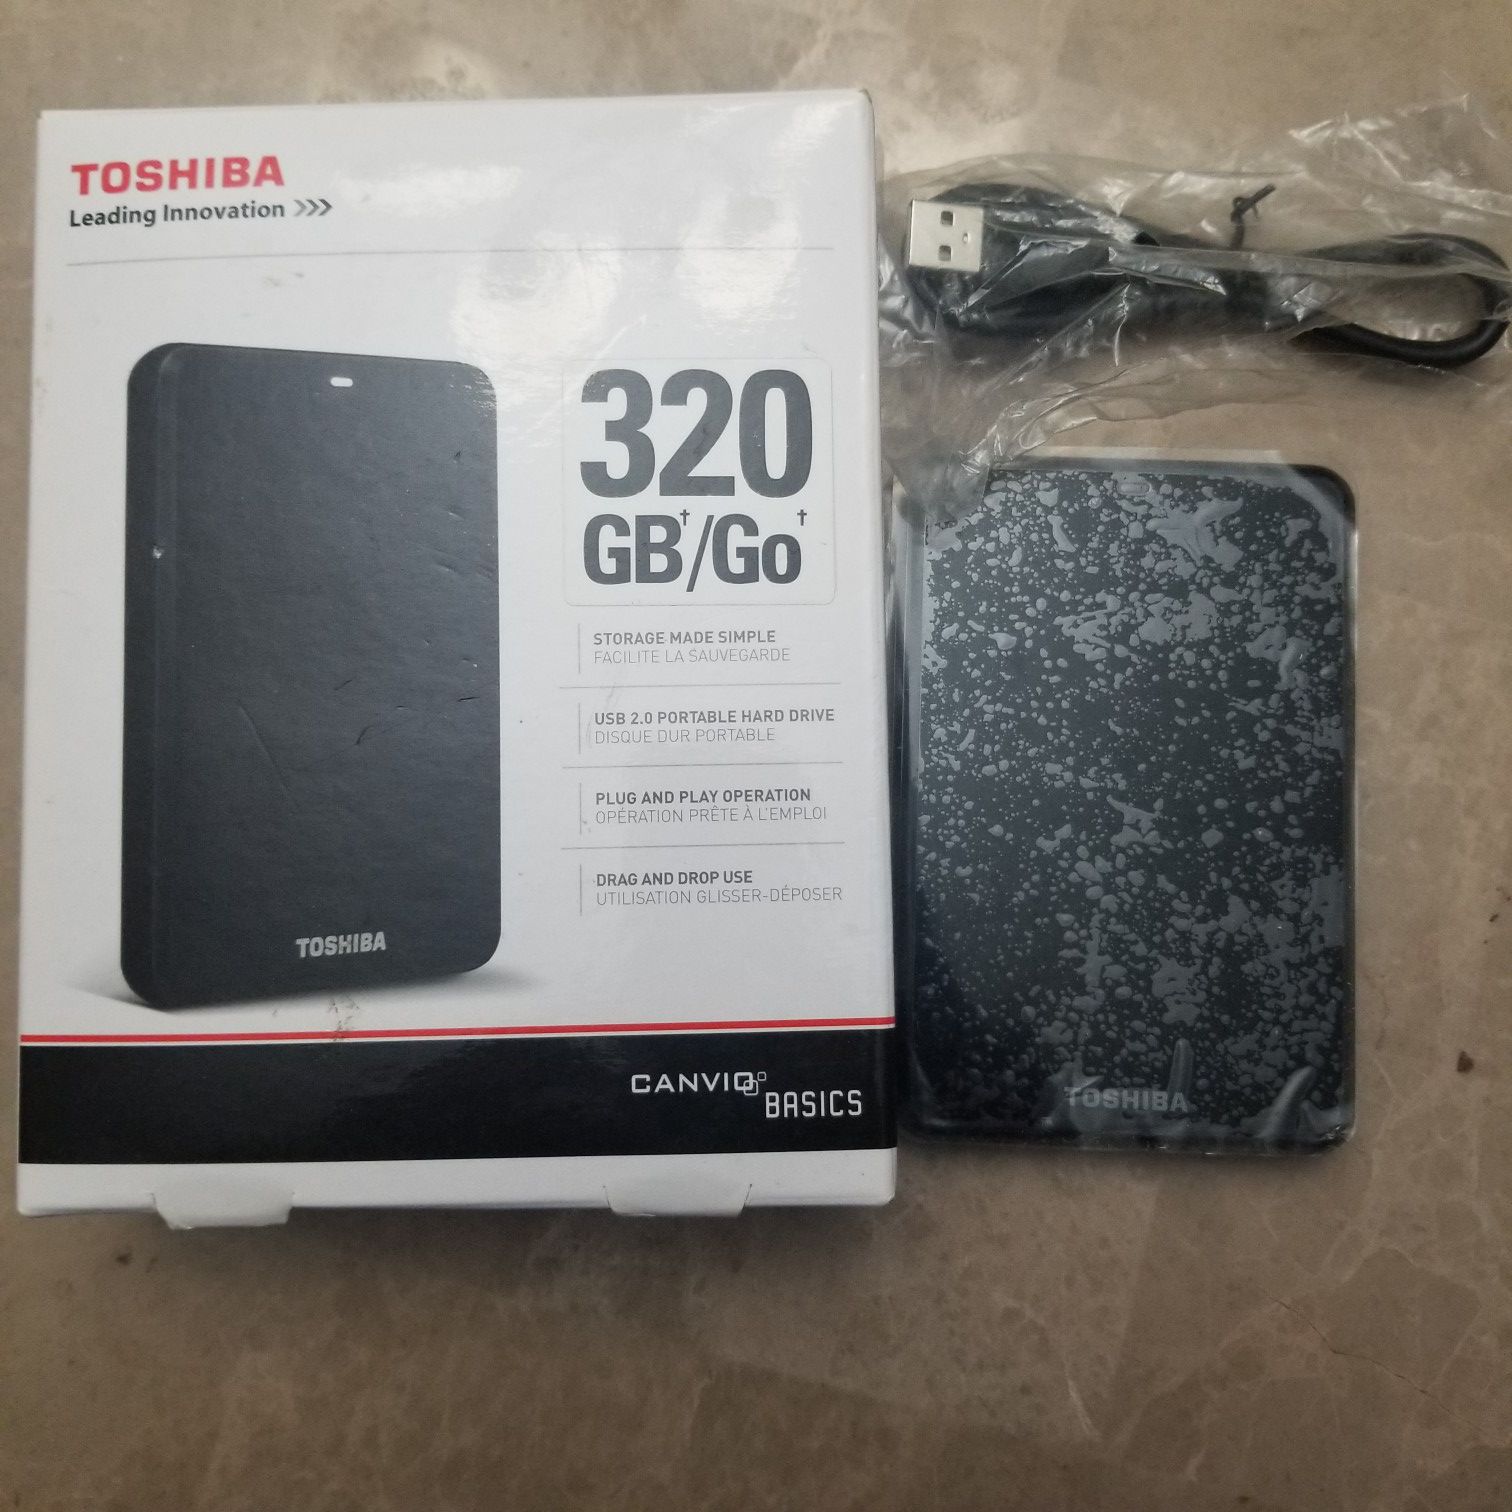 TOSHIBA 320 GB USB Portable Hard Drive